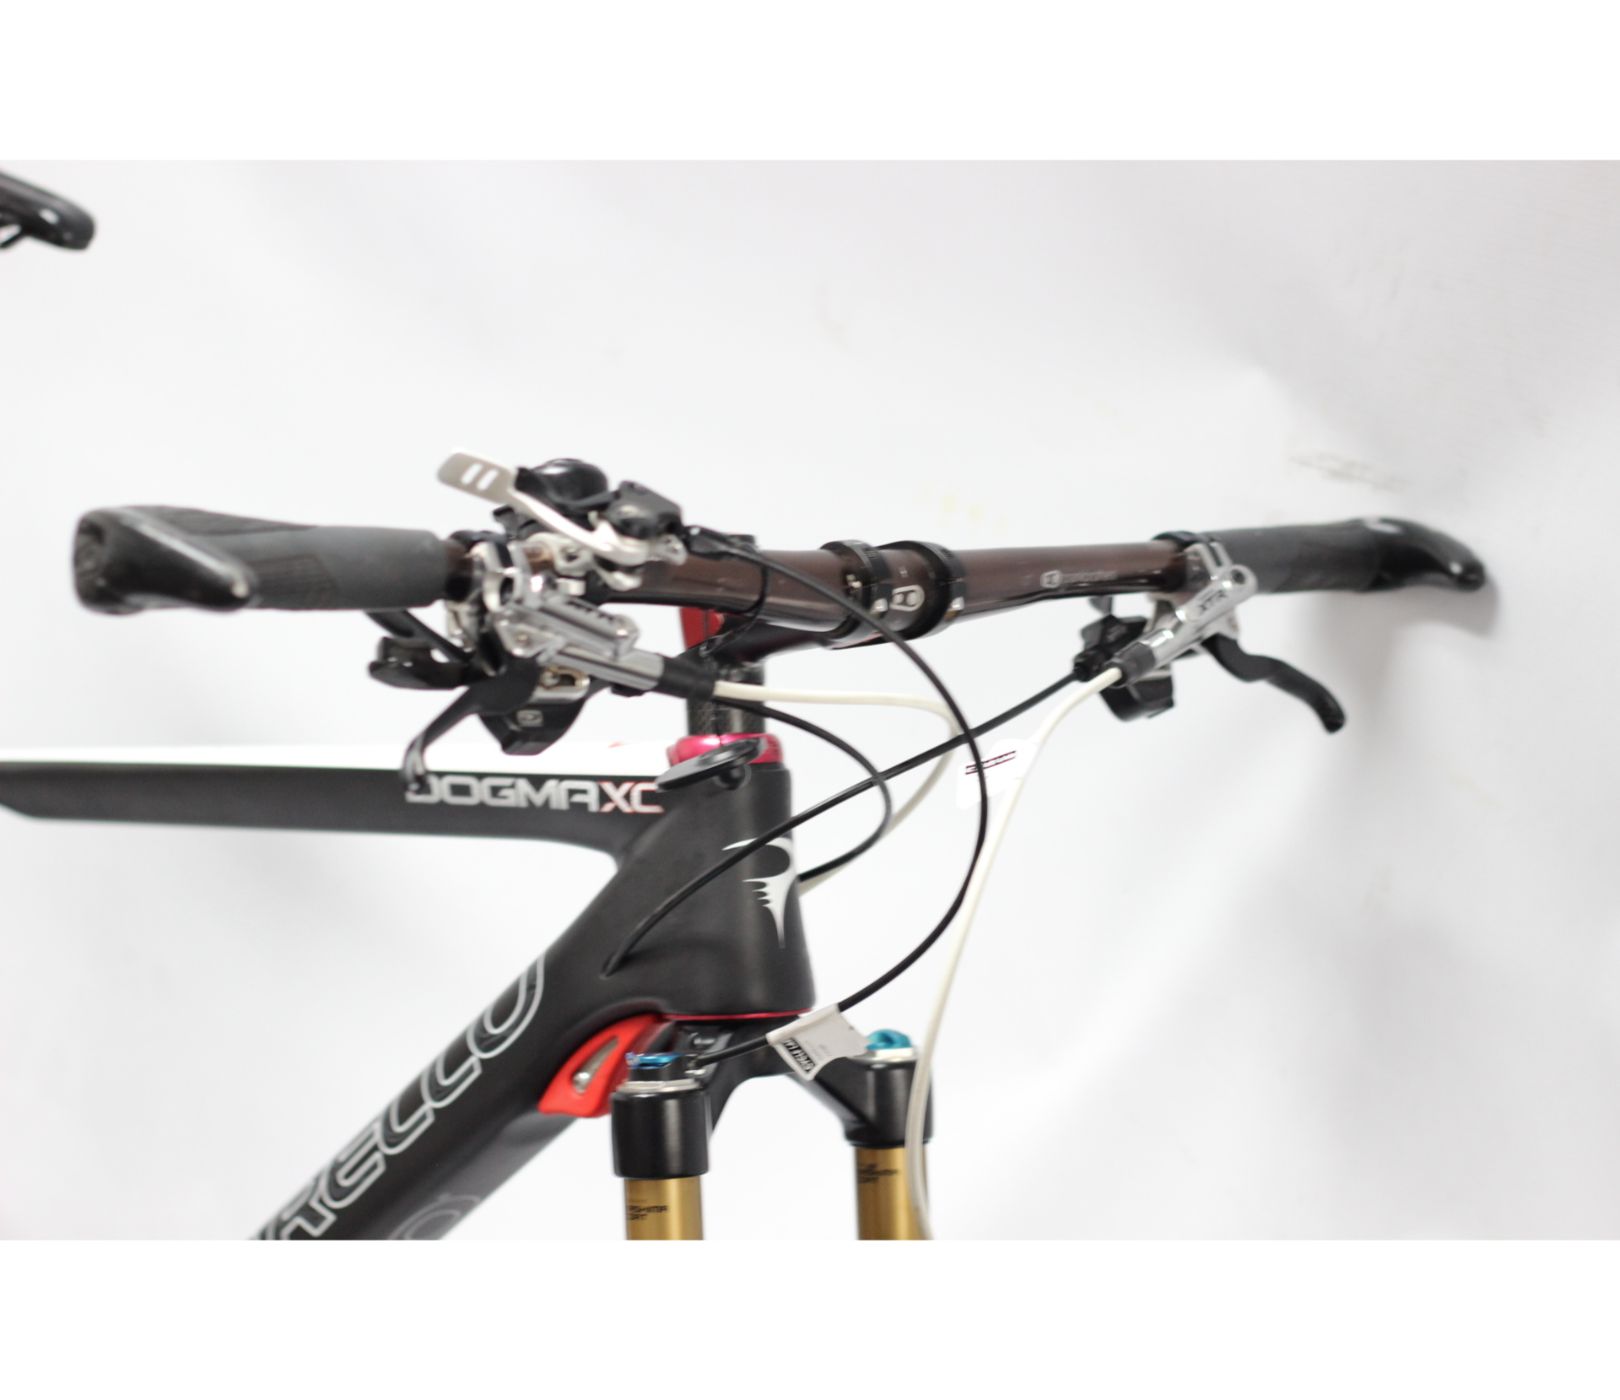 Pre-Owned Pinarello Dogma XC Carbon Hardtail Mountain Bike - L